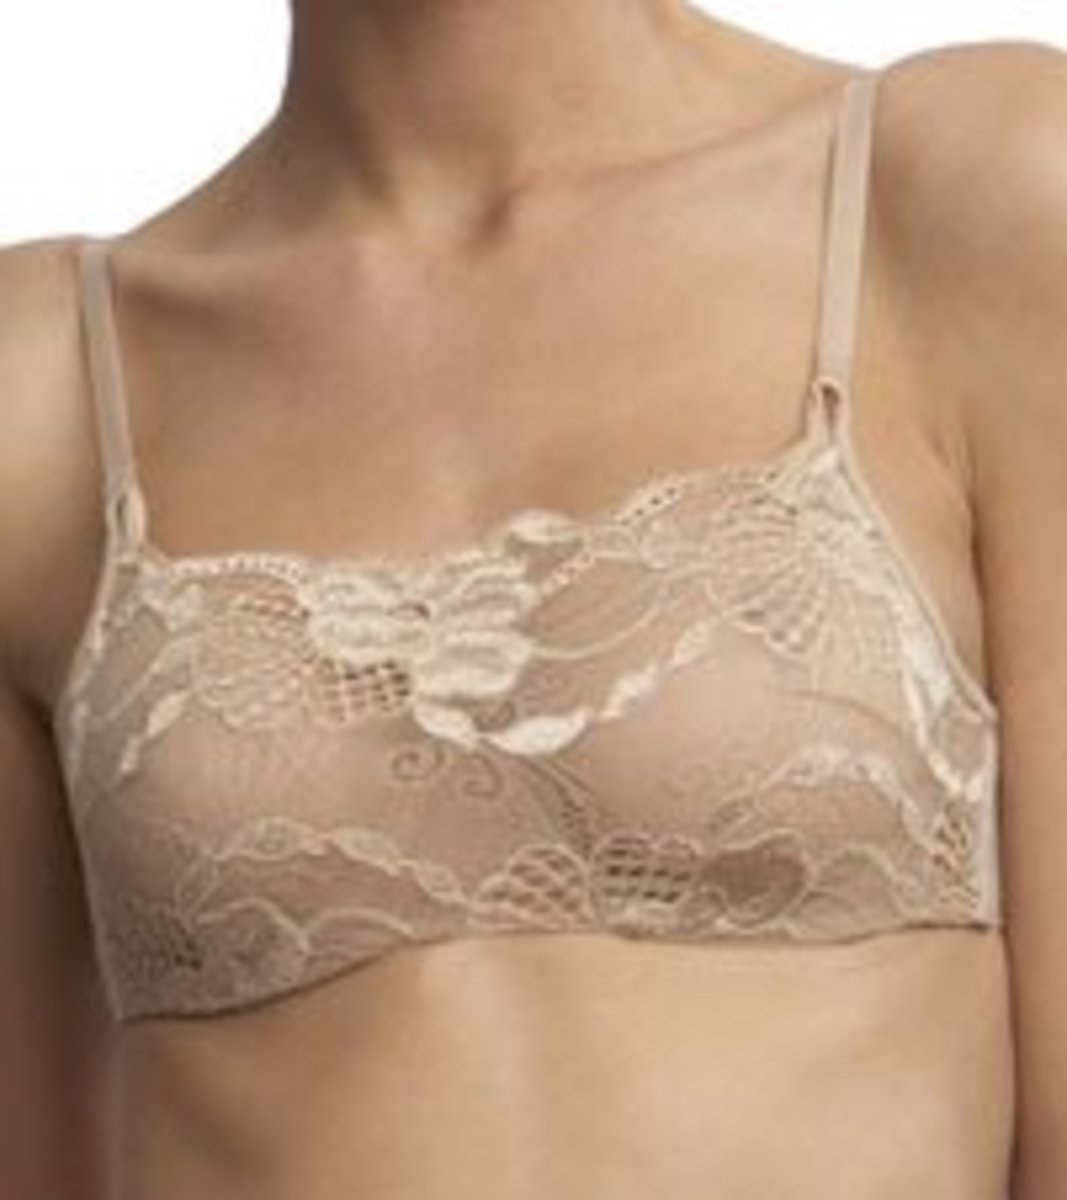 men-in-lingerie-lace-bras-for-men